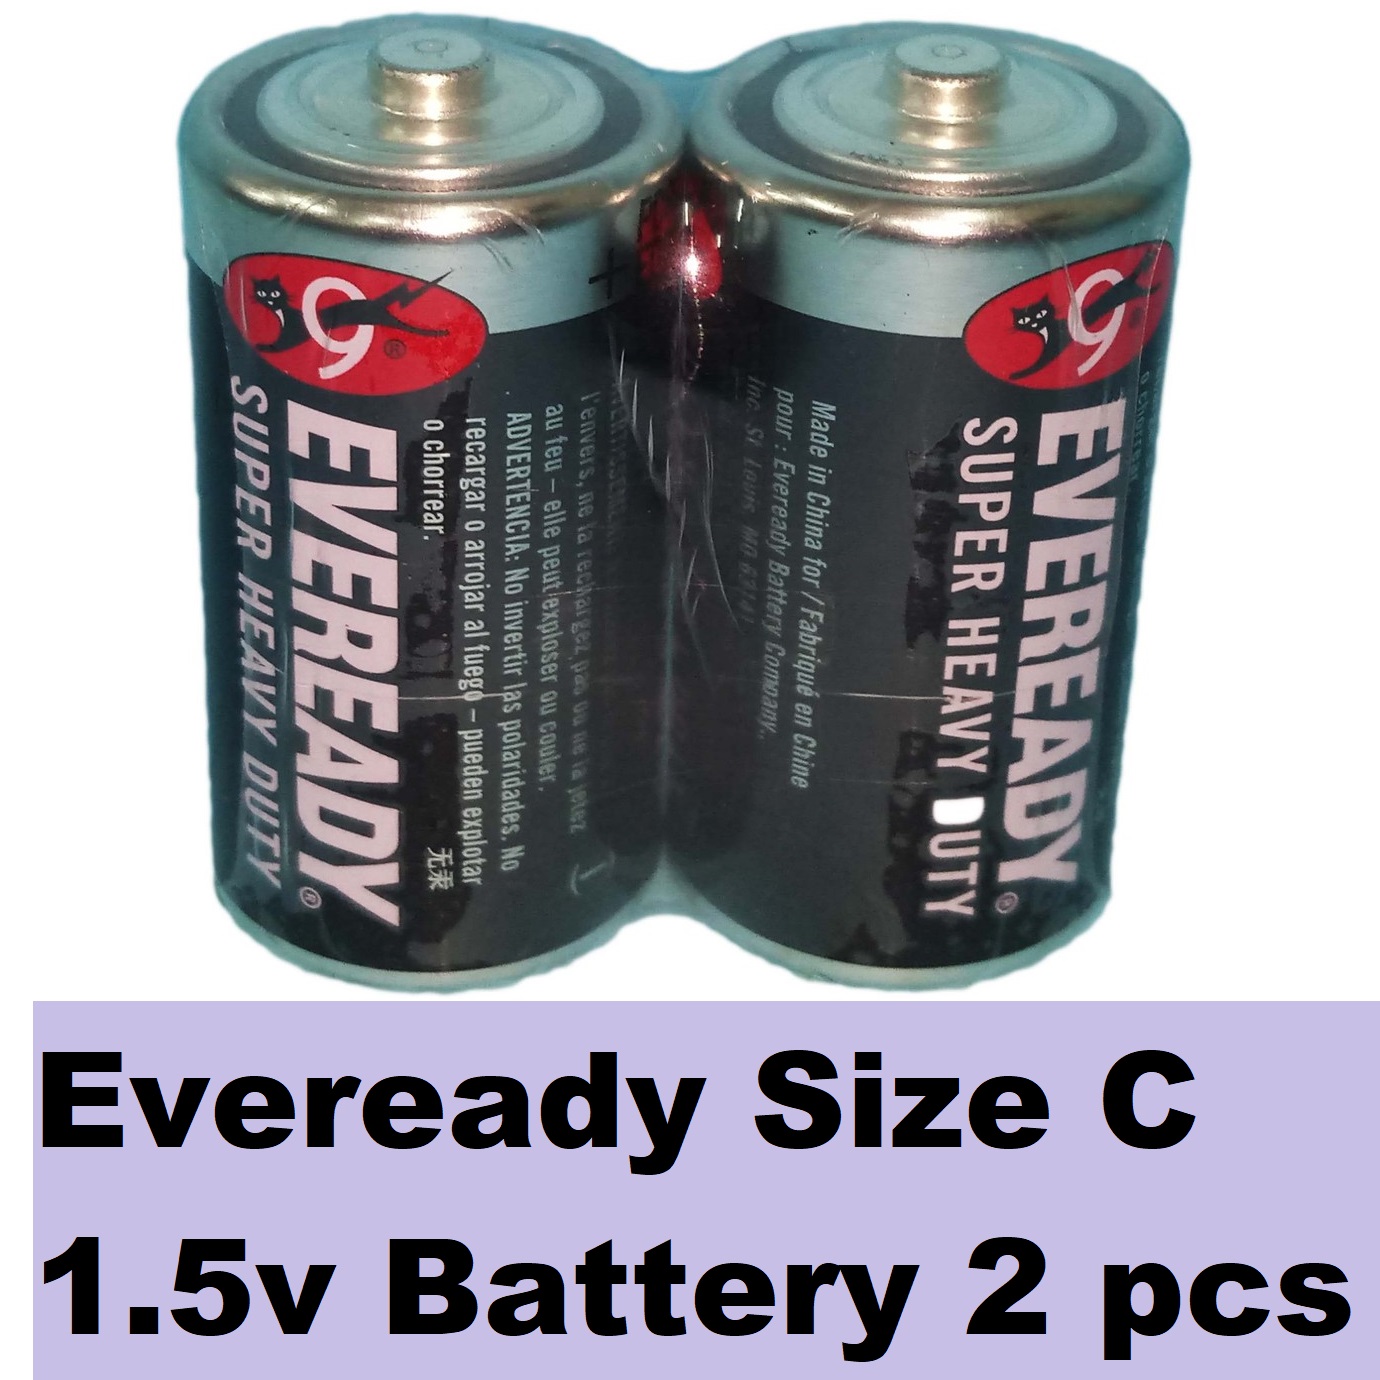 1.5 v battery. Батарейки Size c 1.5v RL 14. Батарейка c lr14 размер. Eveready батарейки 67 вольт. Four 1.5 v Battery.